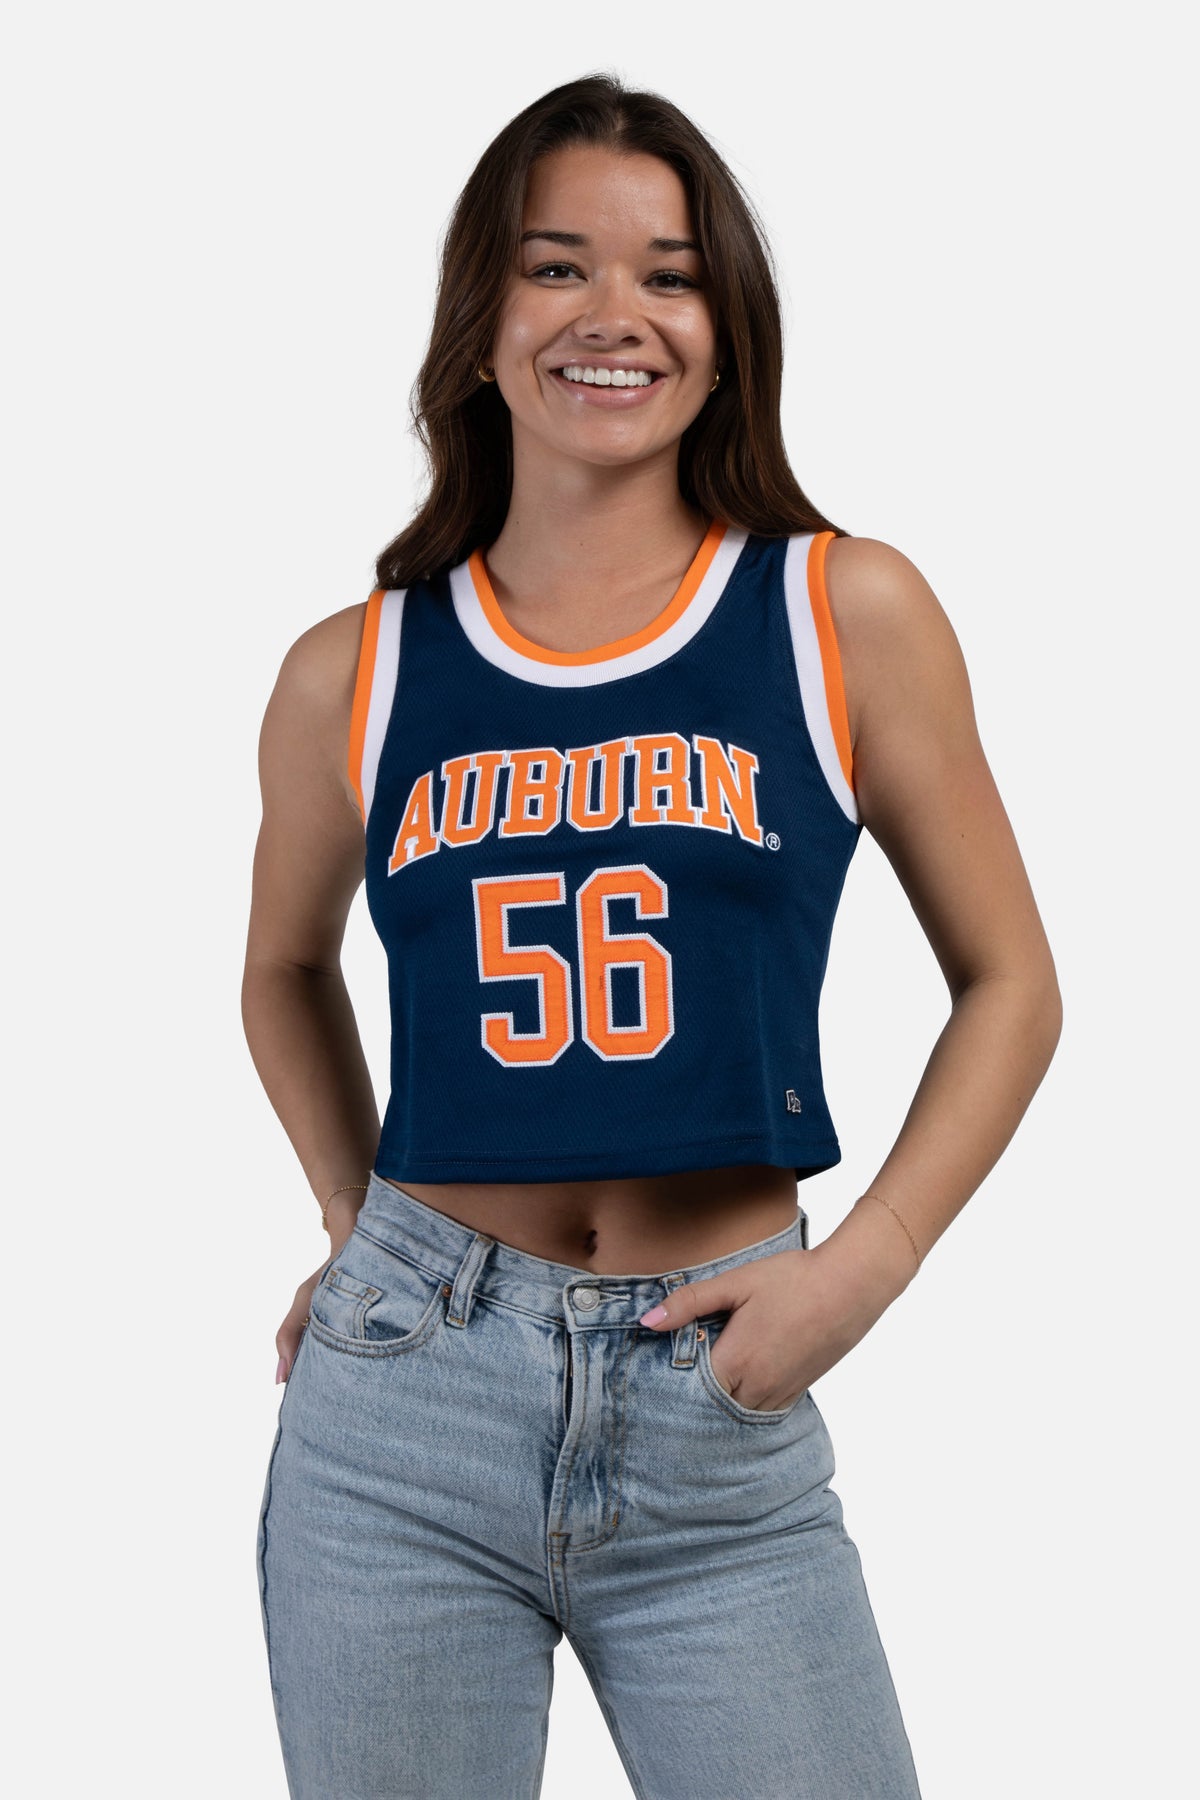 Auburn University Basketball Top